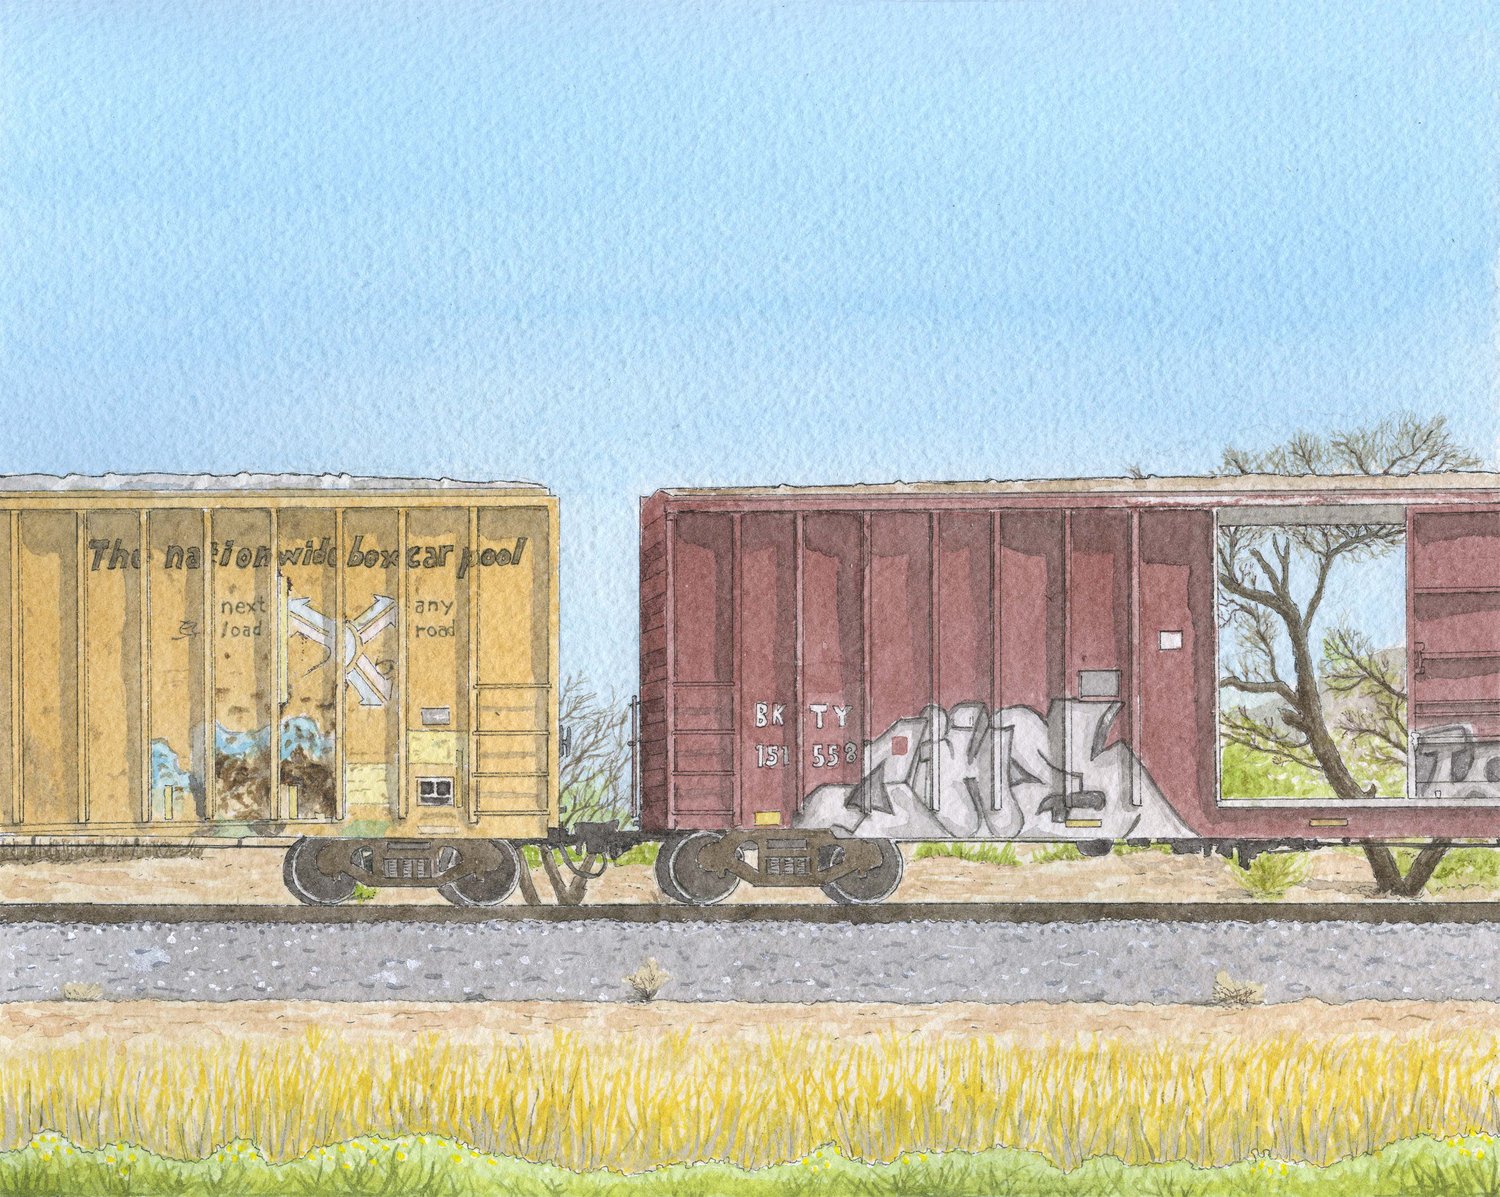 Freight Train #2 Print